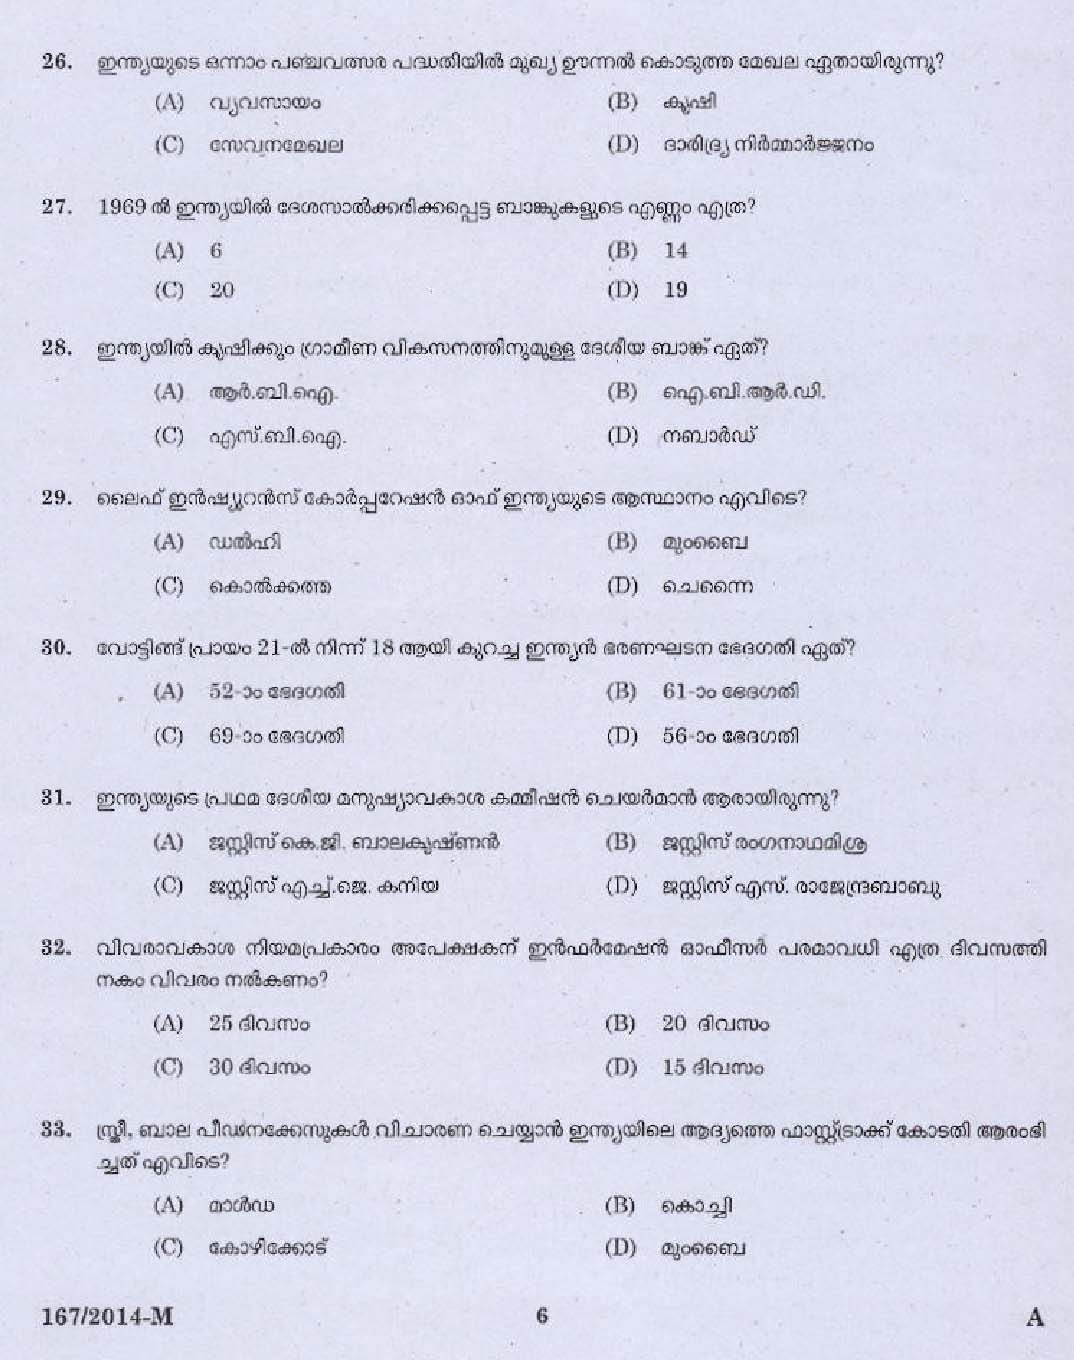 KPSC Male Warder Exam 2014 Code 1672014 4